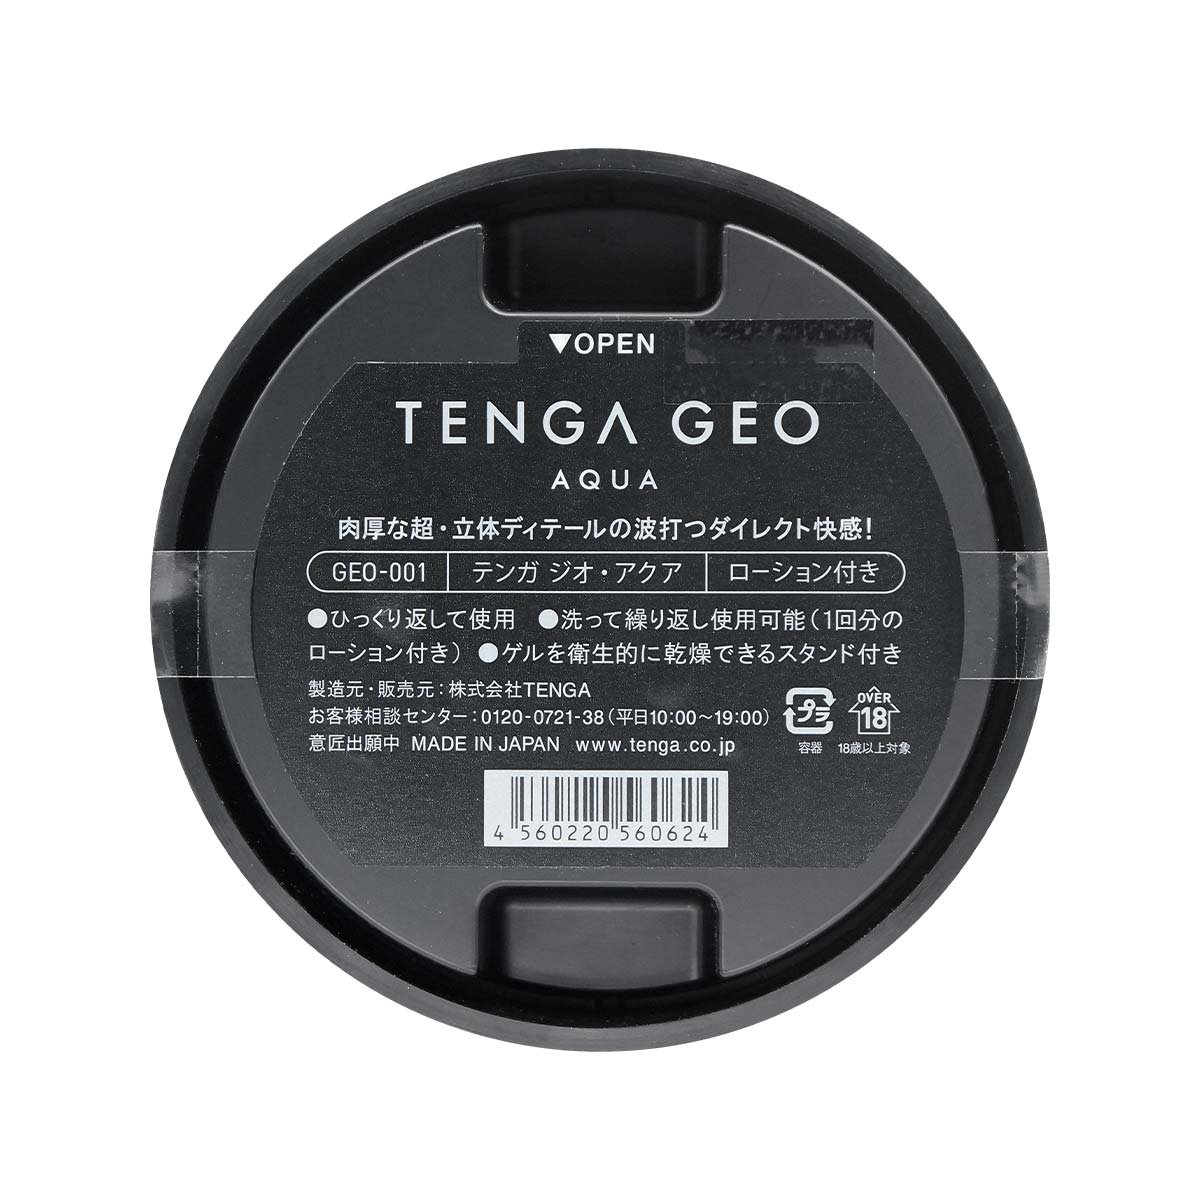 TENGA GEO AQUA Pocket Pussy-p_3